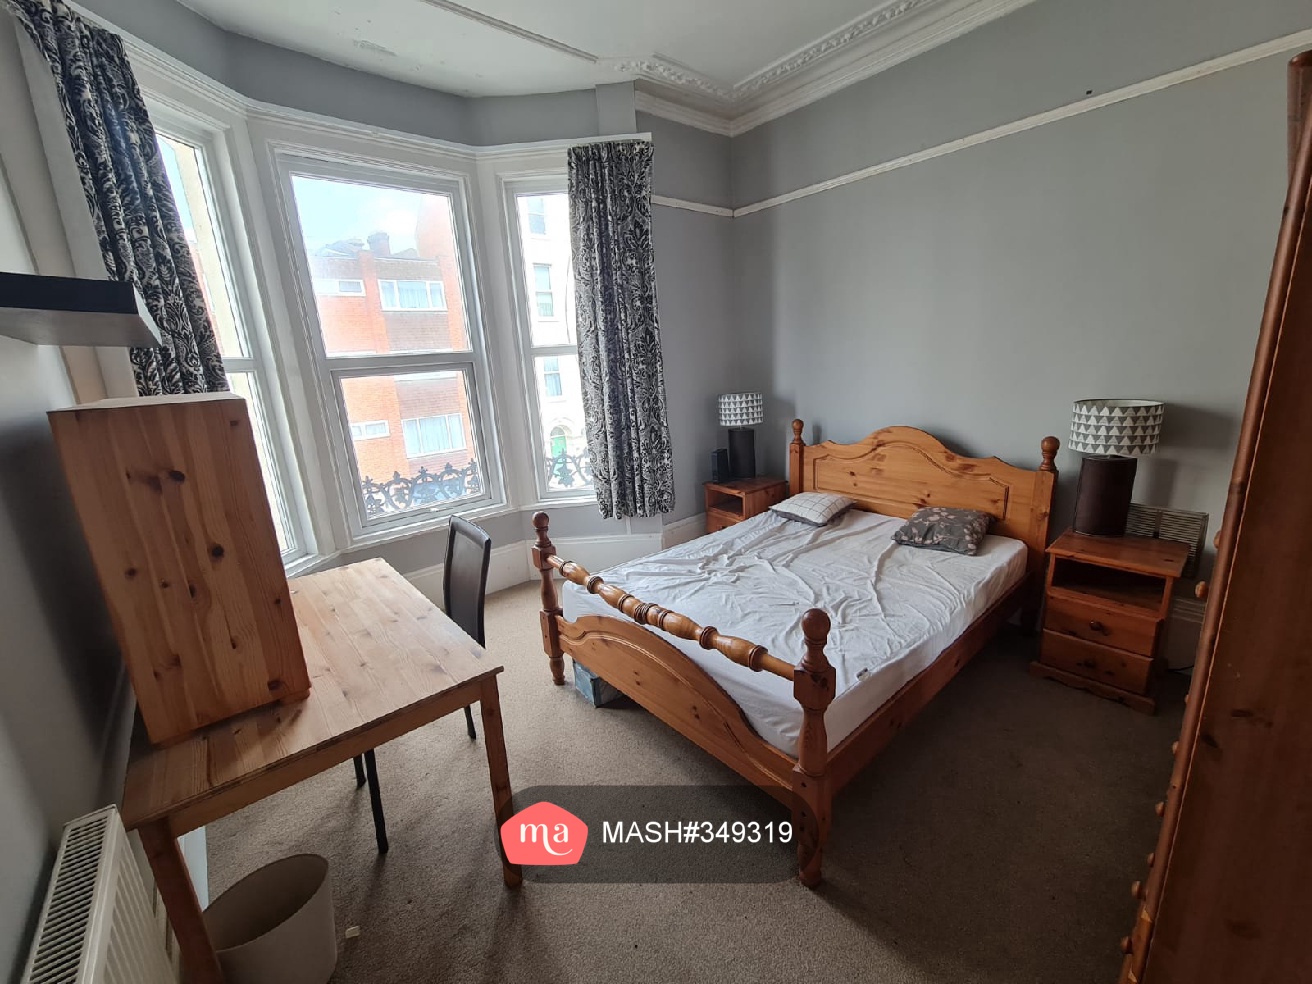 3 Bedroom Flat to rent in Southsea - Mashroom